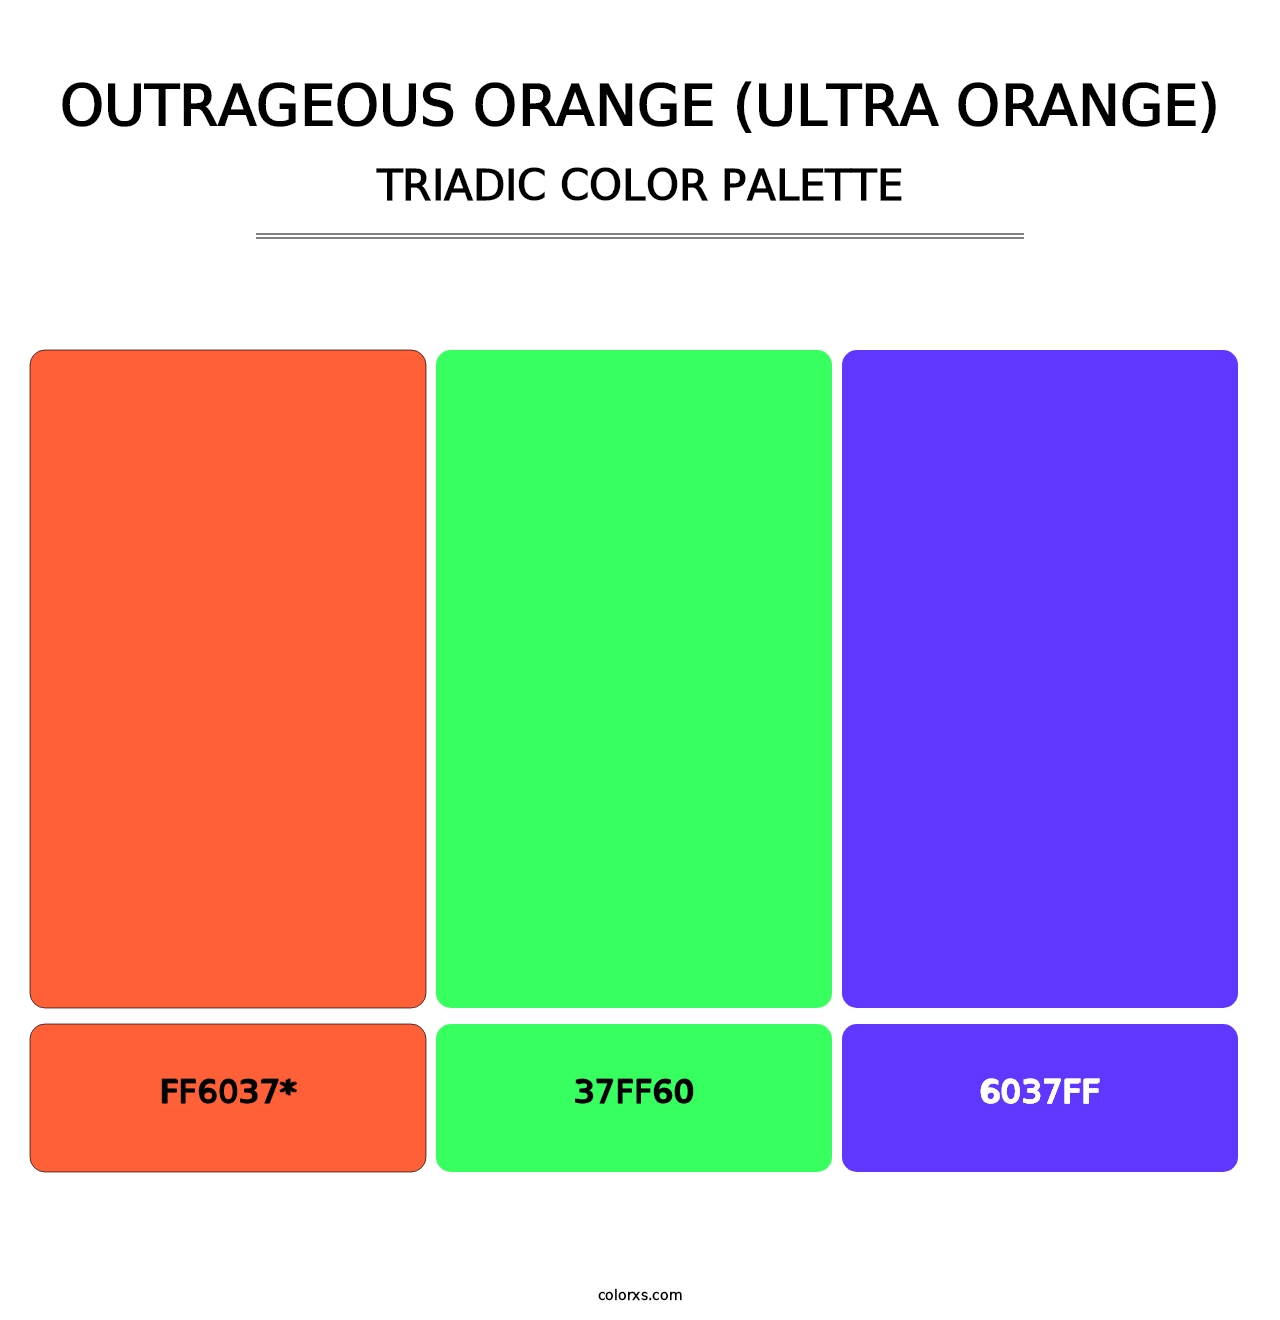 Outrageous Orange (Ultra Orange) - Triadic Color Palette